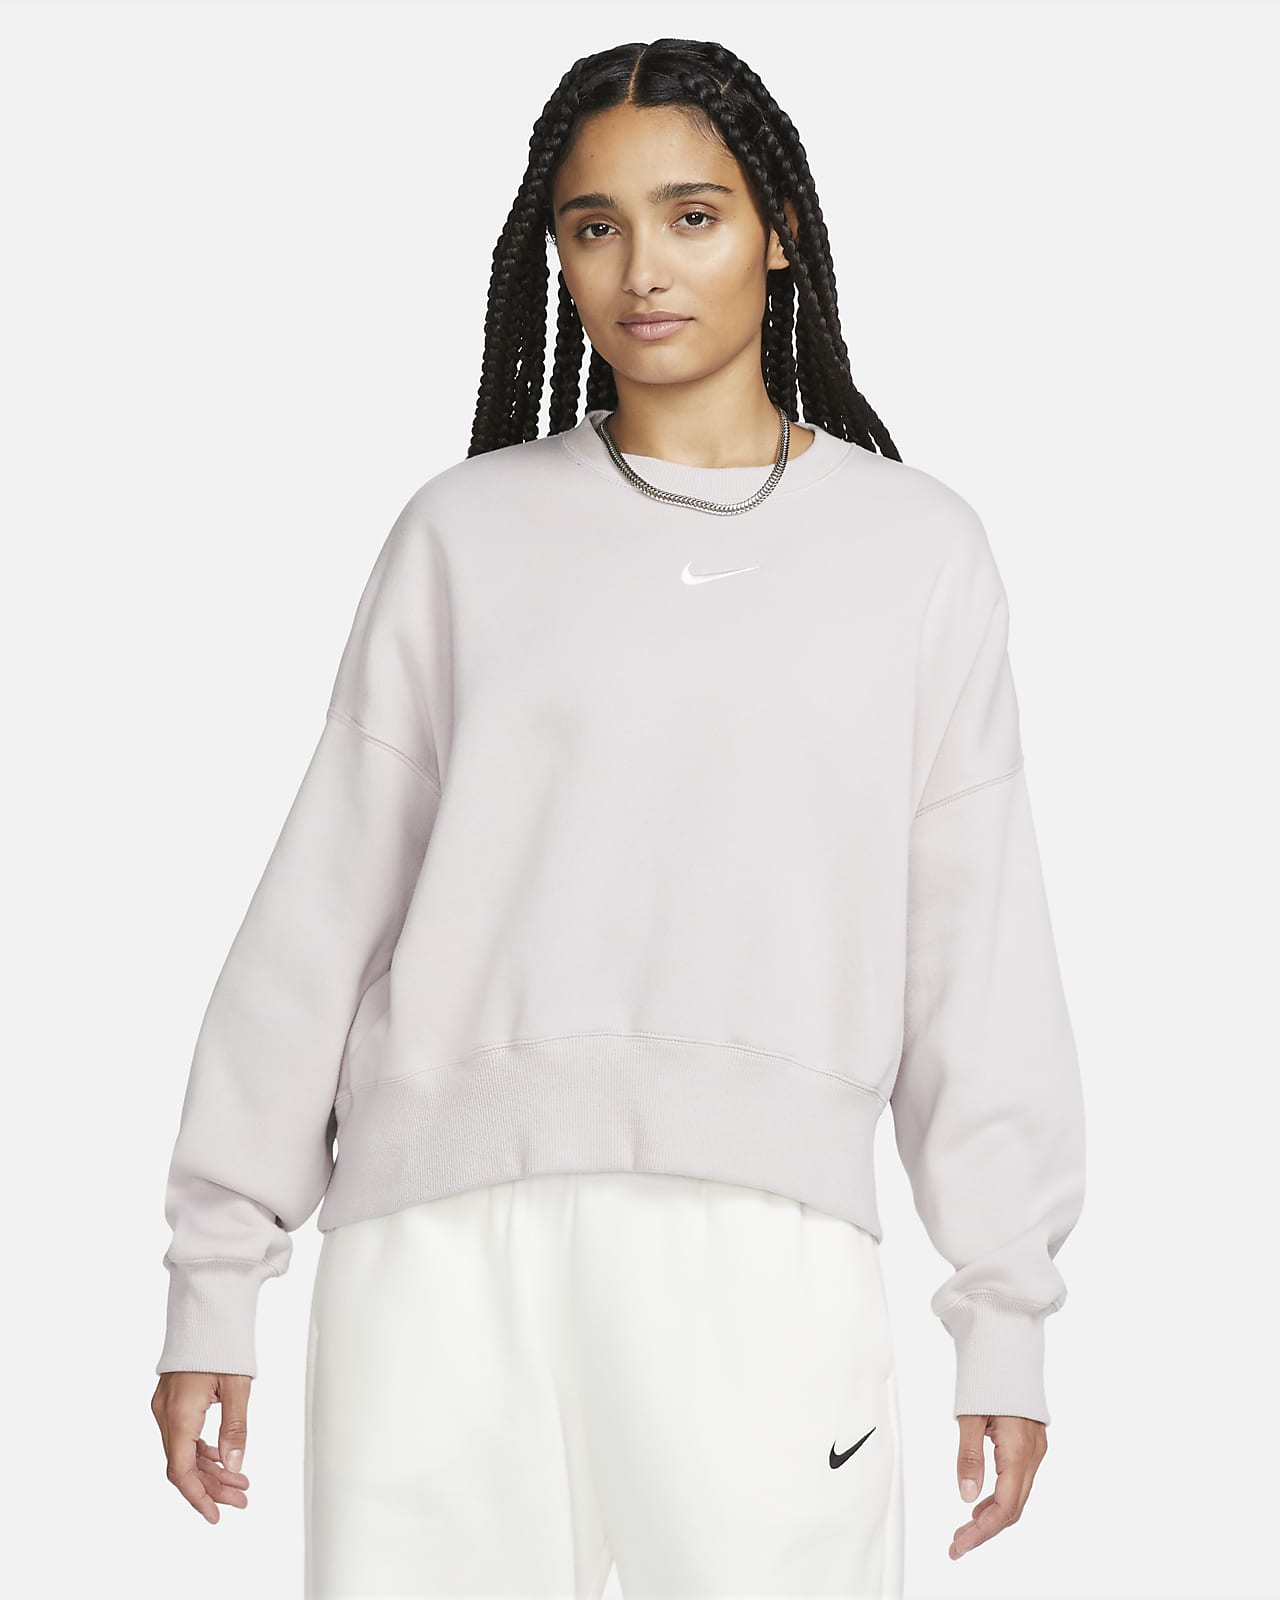 Sweatshirt de gola redonda extremamente folgada Nike Sportswear